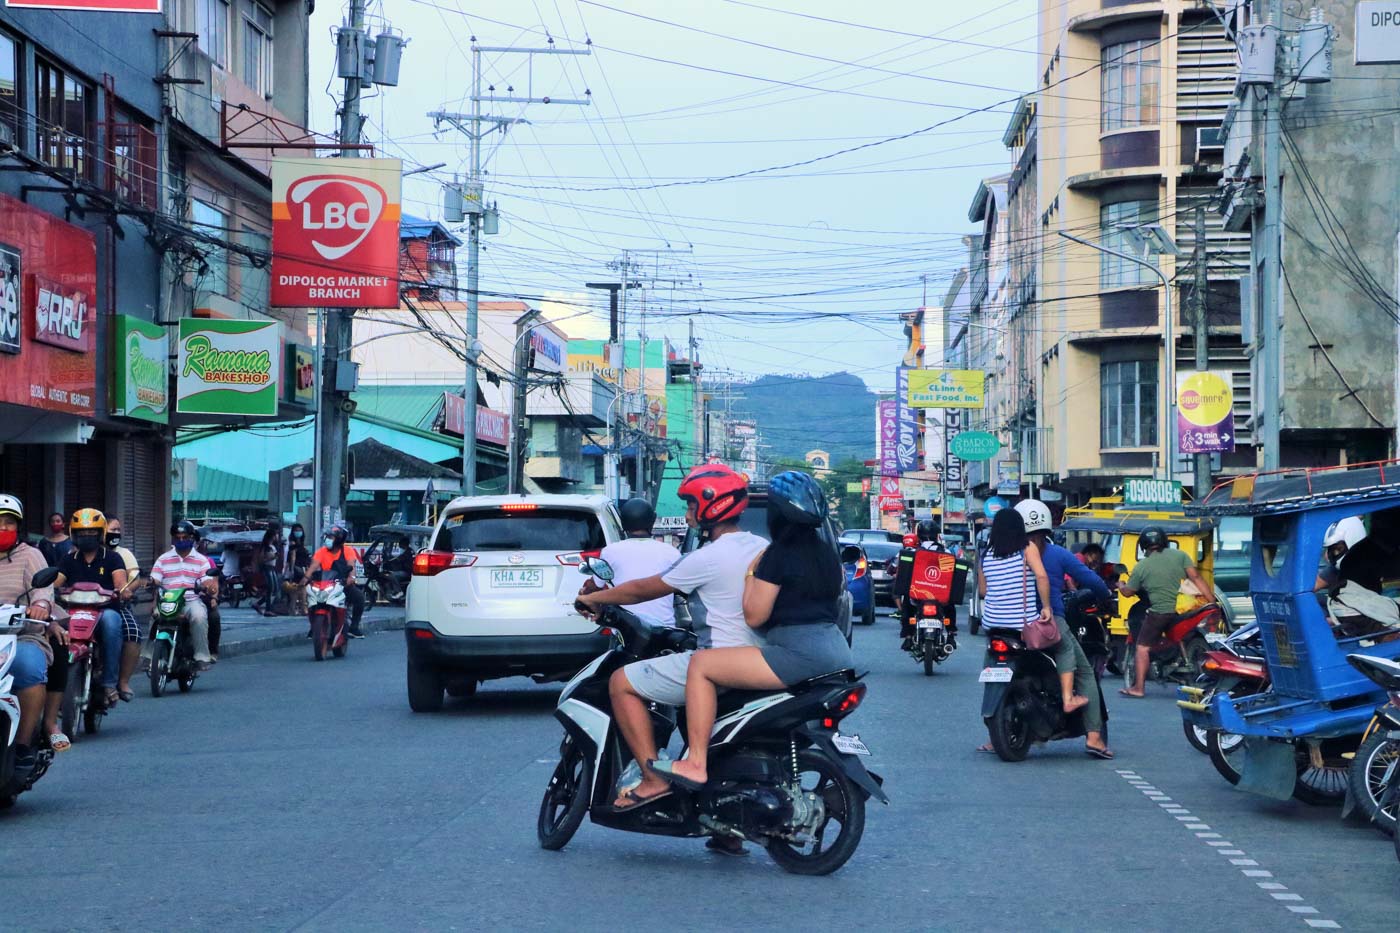 Allow once. Краби Таун. Скутер на дороге. Мопед в городе. Движение в Азии мотоциклы.